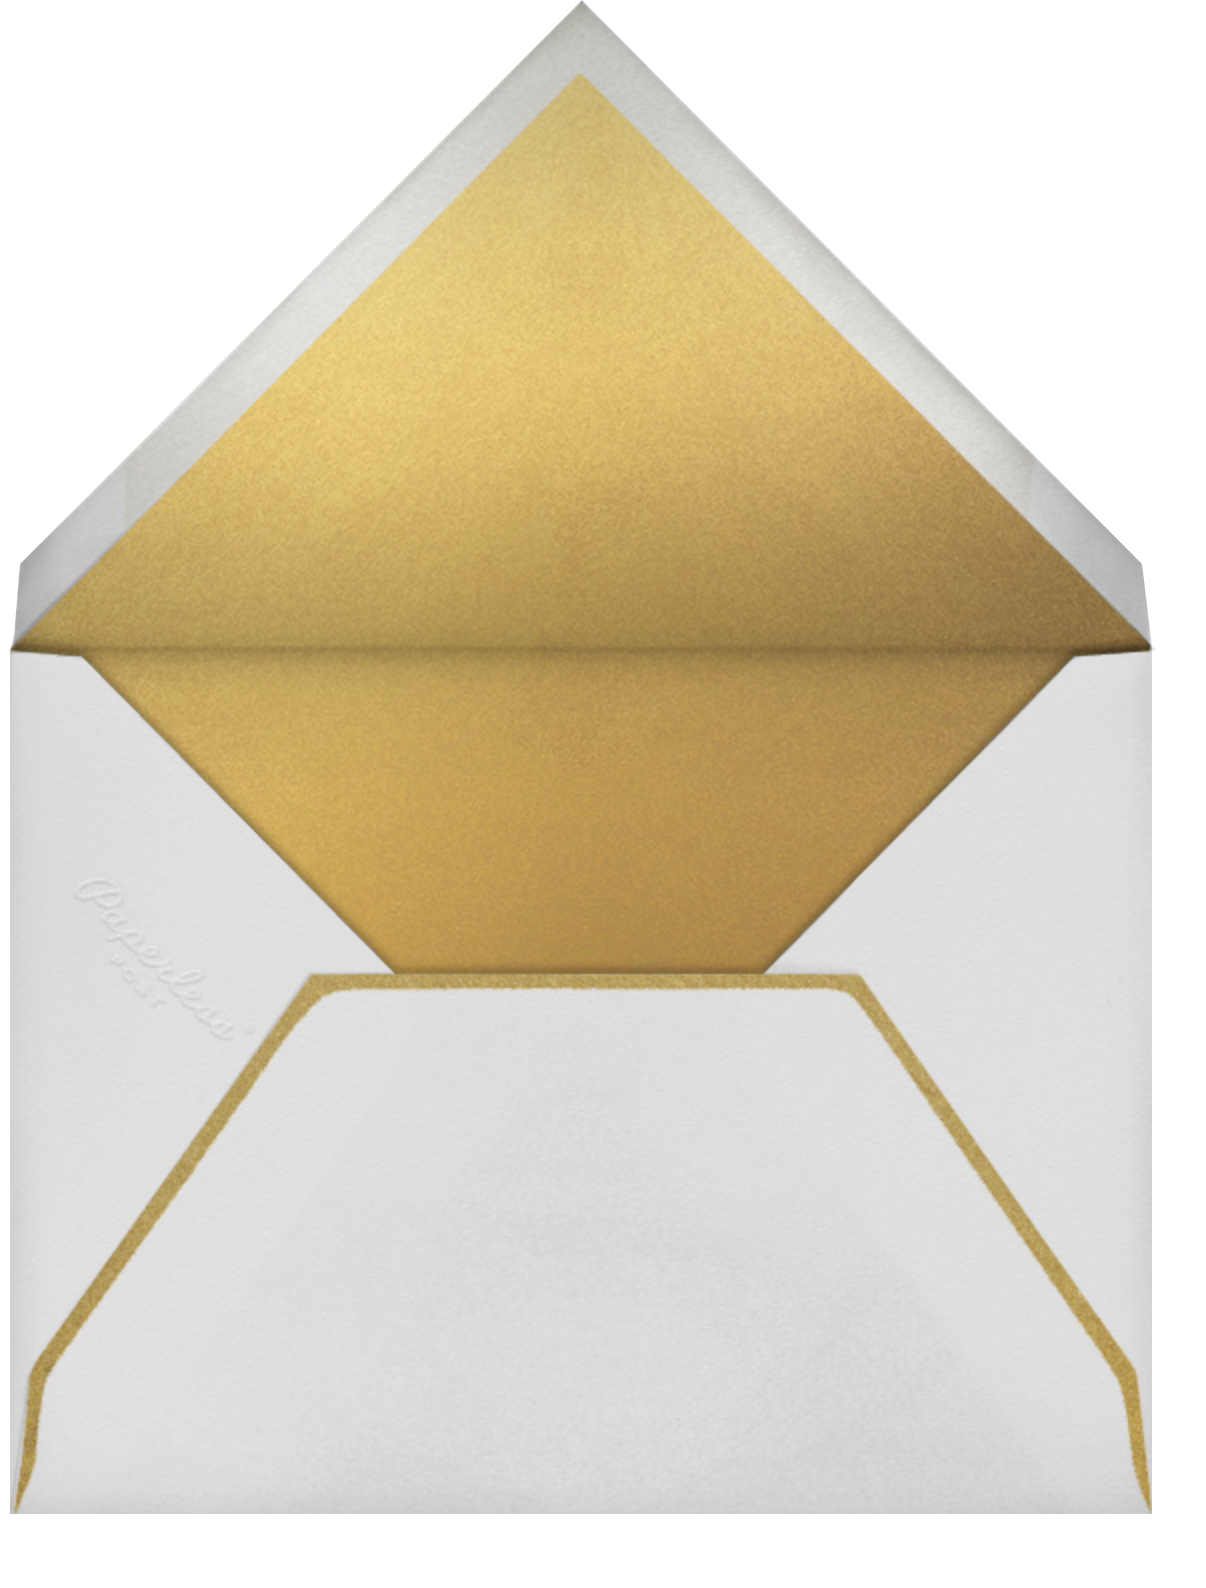 Niwas (Invitation) - Paperless Post - Envelope